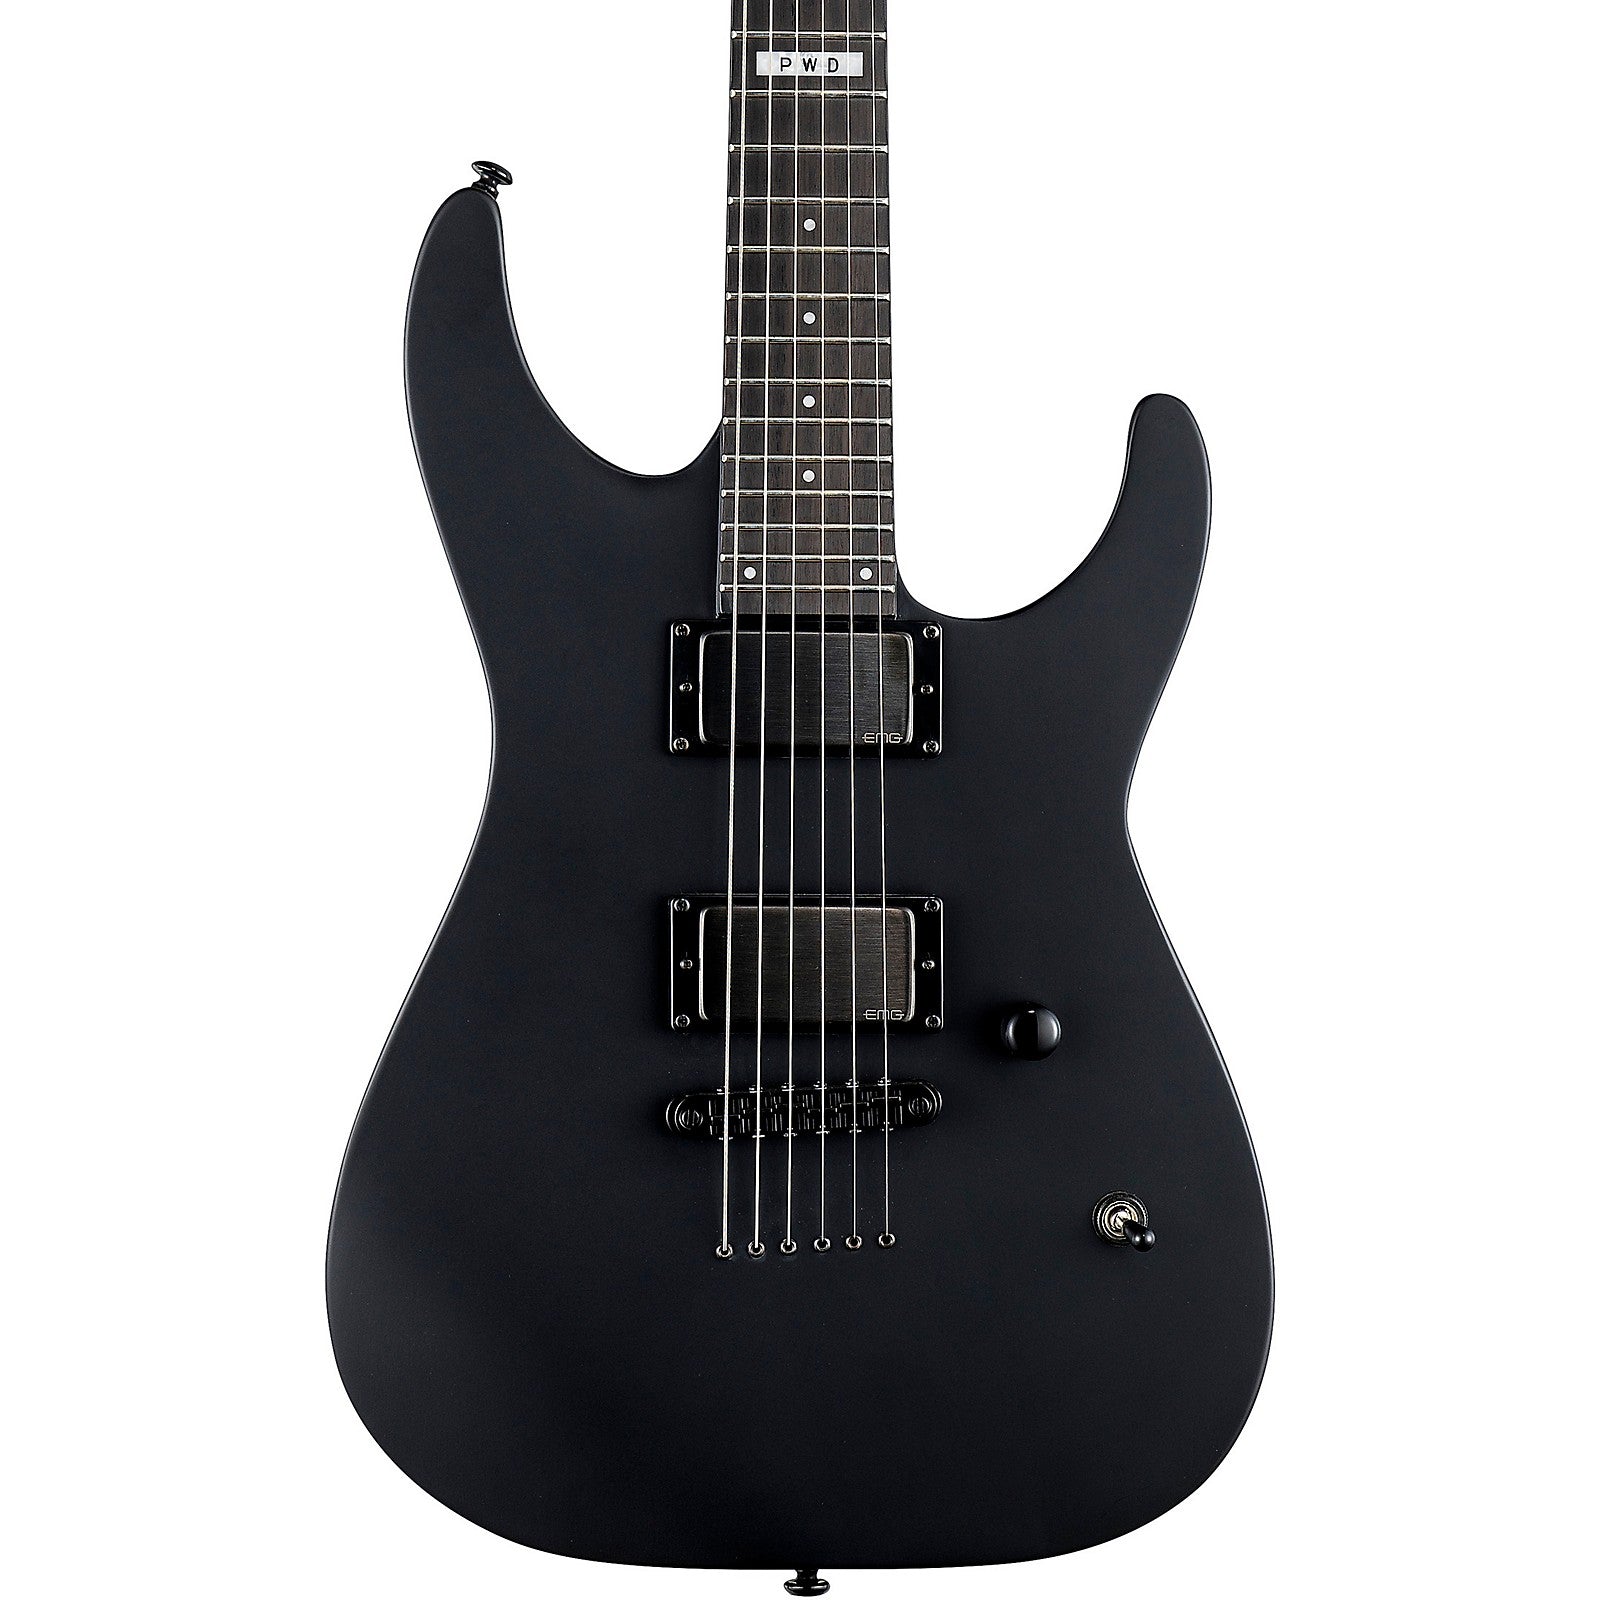 Esp LTD Jl-600 Jeff Ling Parkway Drive Signature Electric Guitar- Black Satin (Jl600blks)